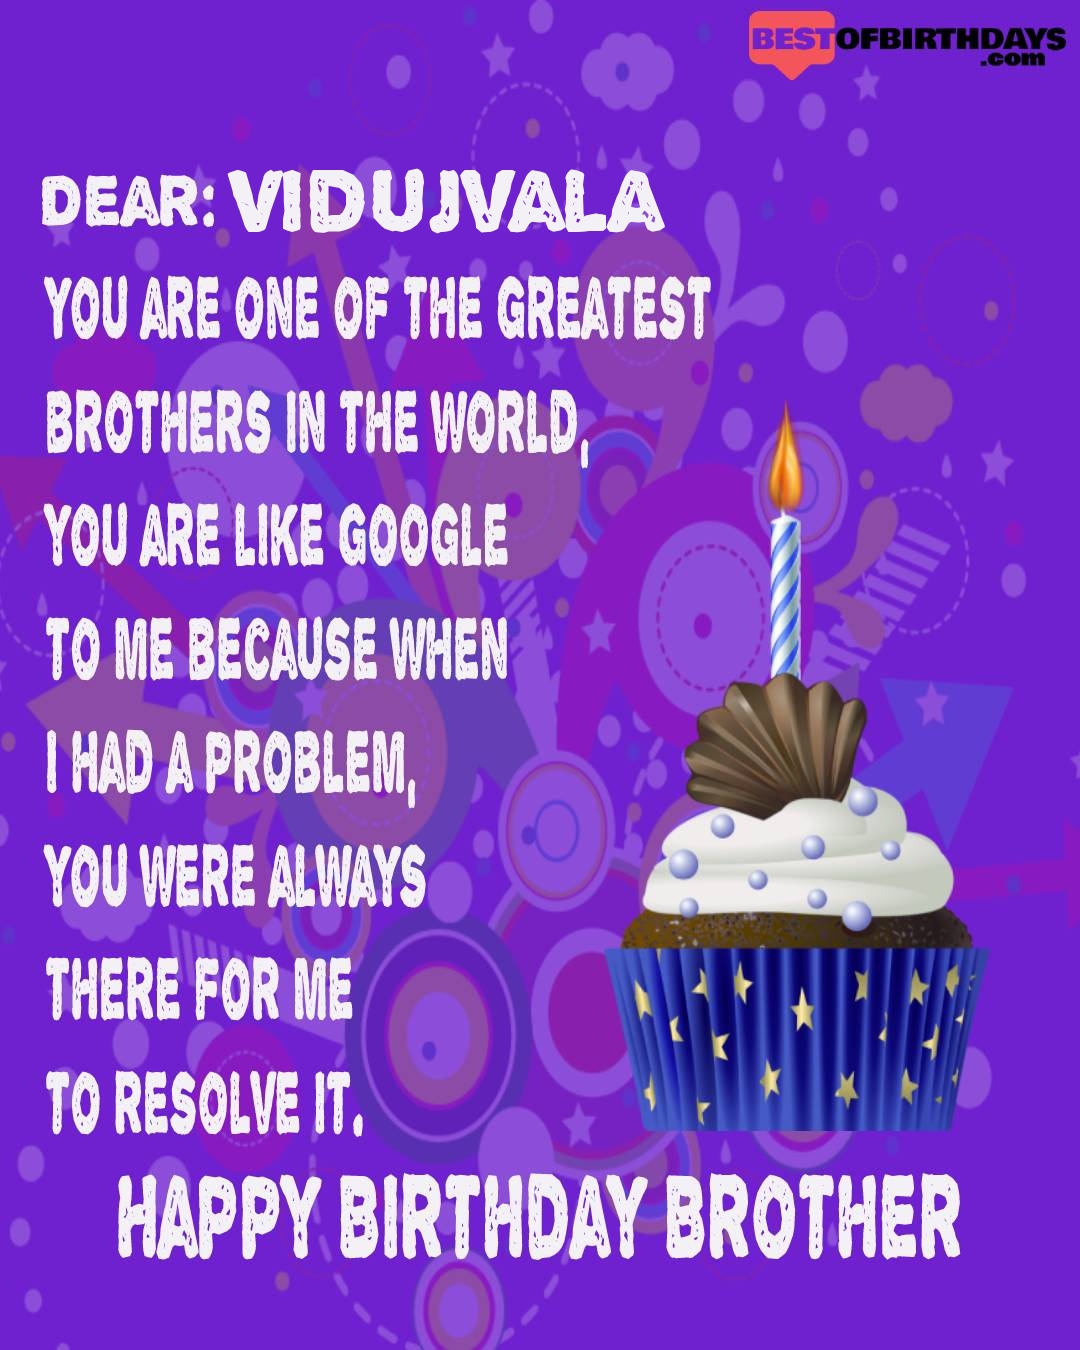 Happy birthday vidujvala bhai brother bro